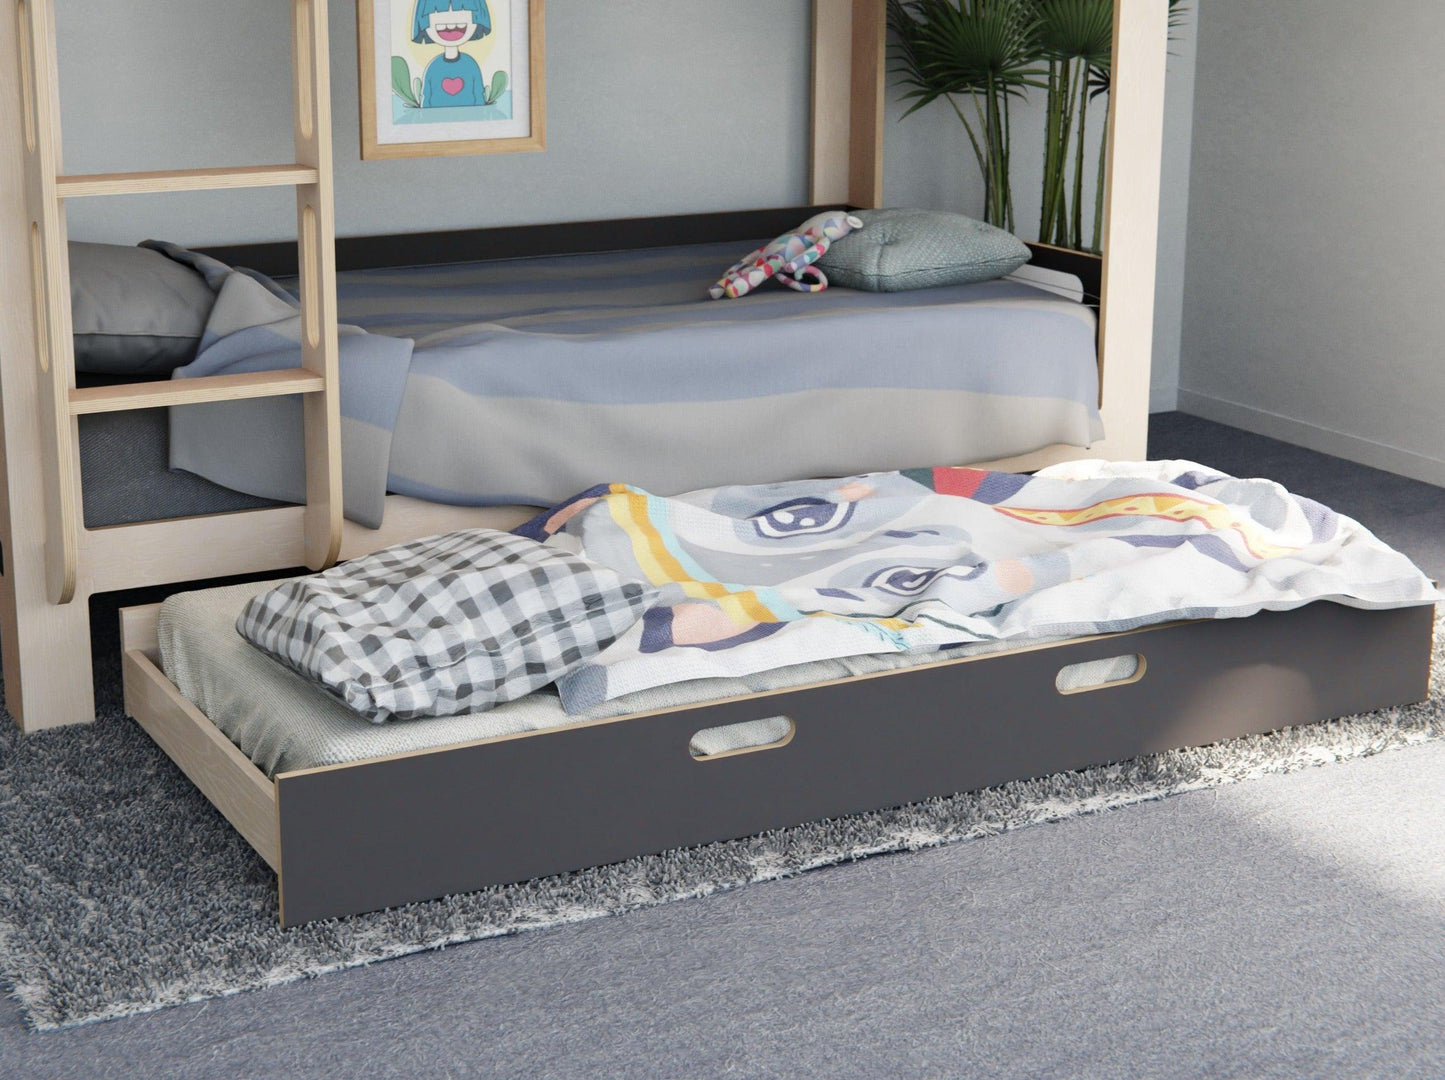 Bunk bed wonders: study, sleep, store! Plywood sets in black. Auckland NZ